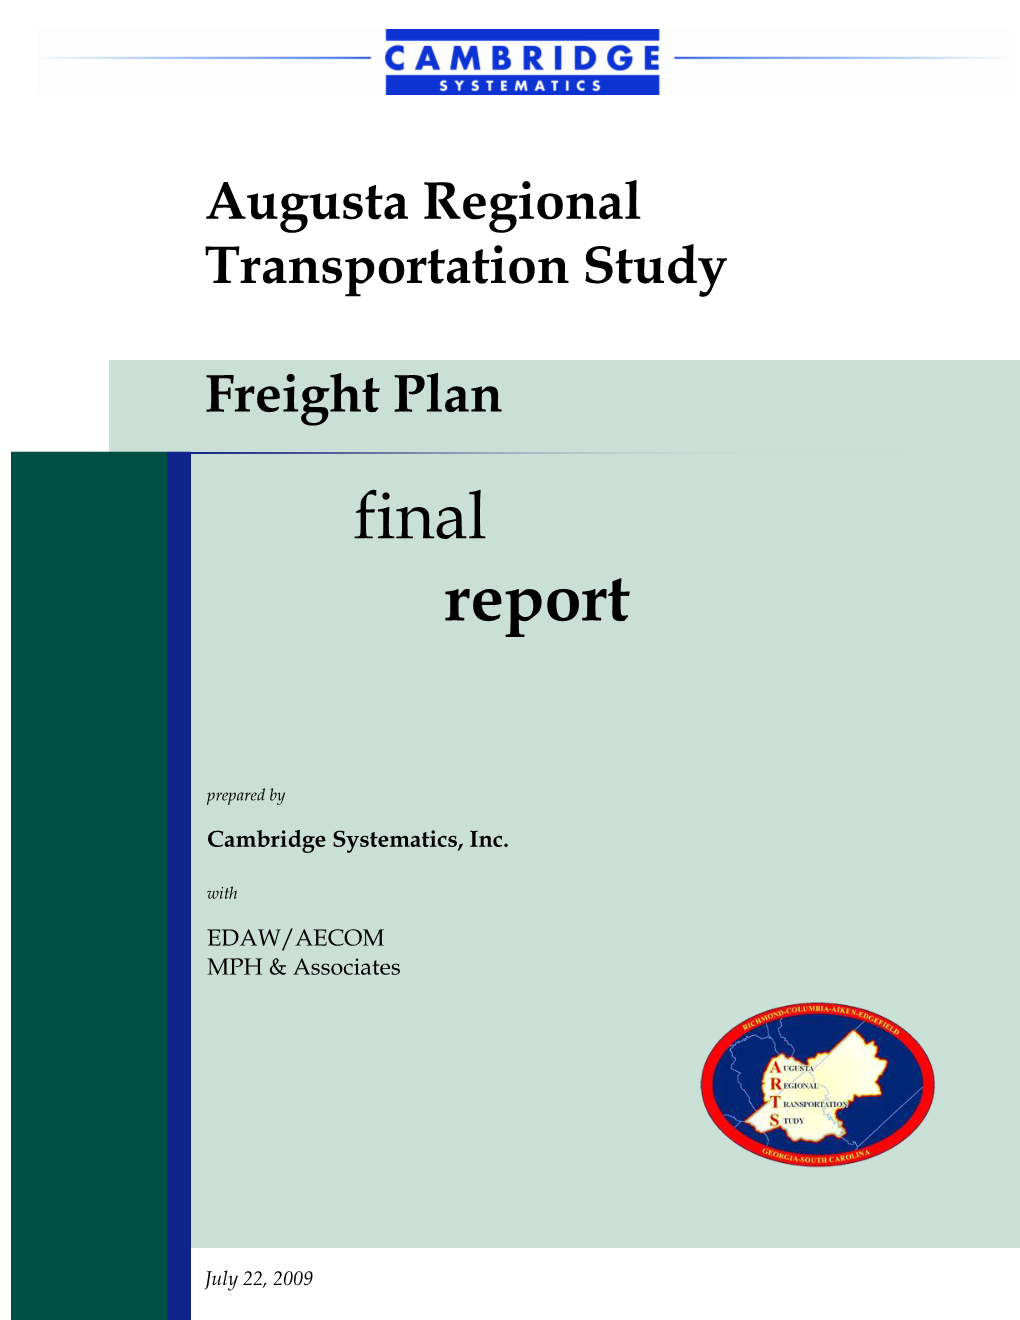 Augusta Regional Transportation Study Freight Plan